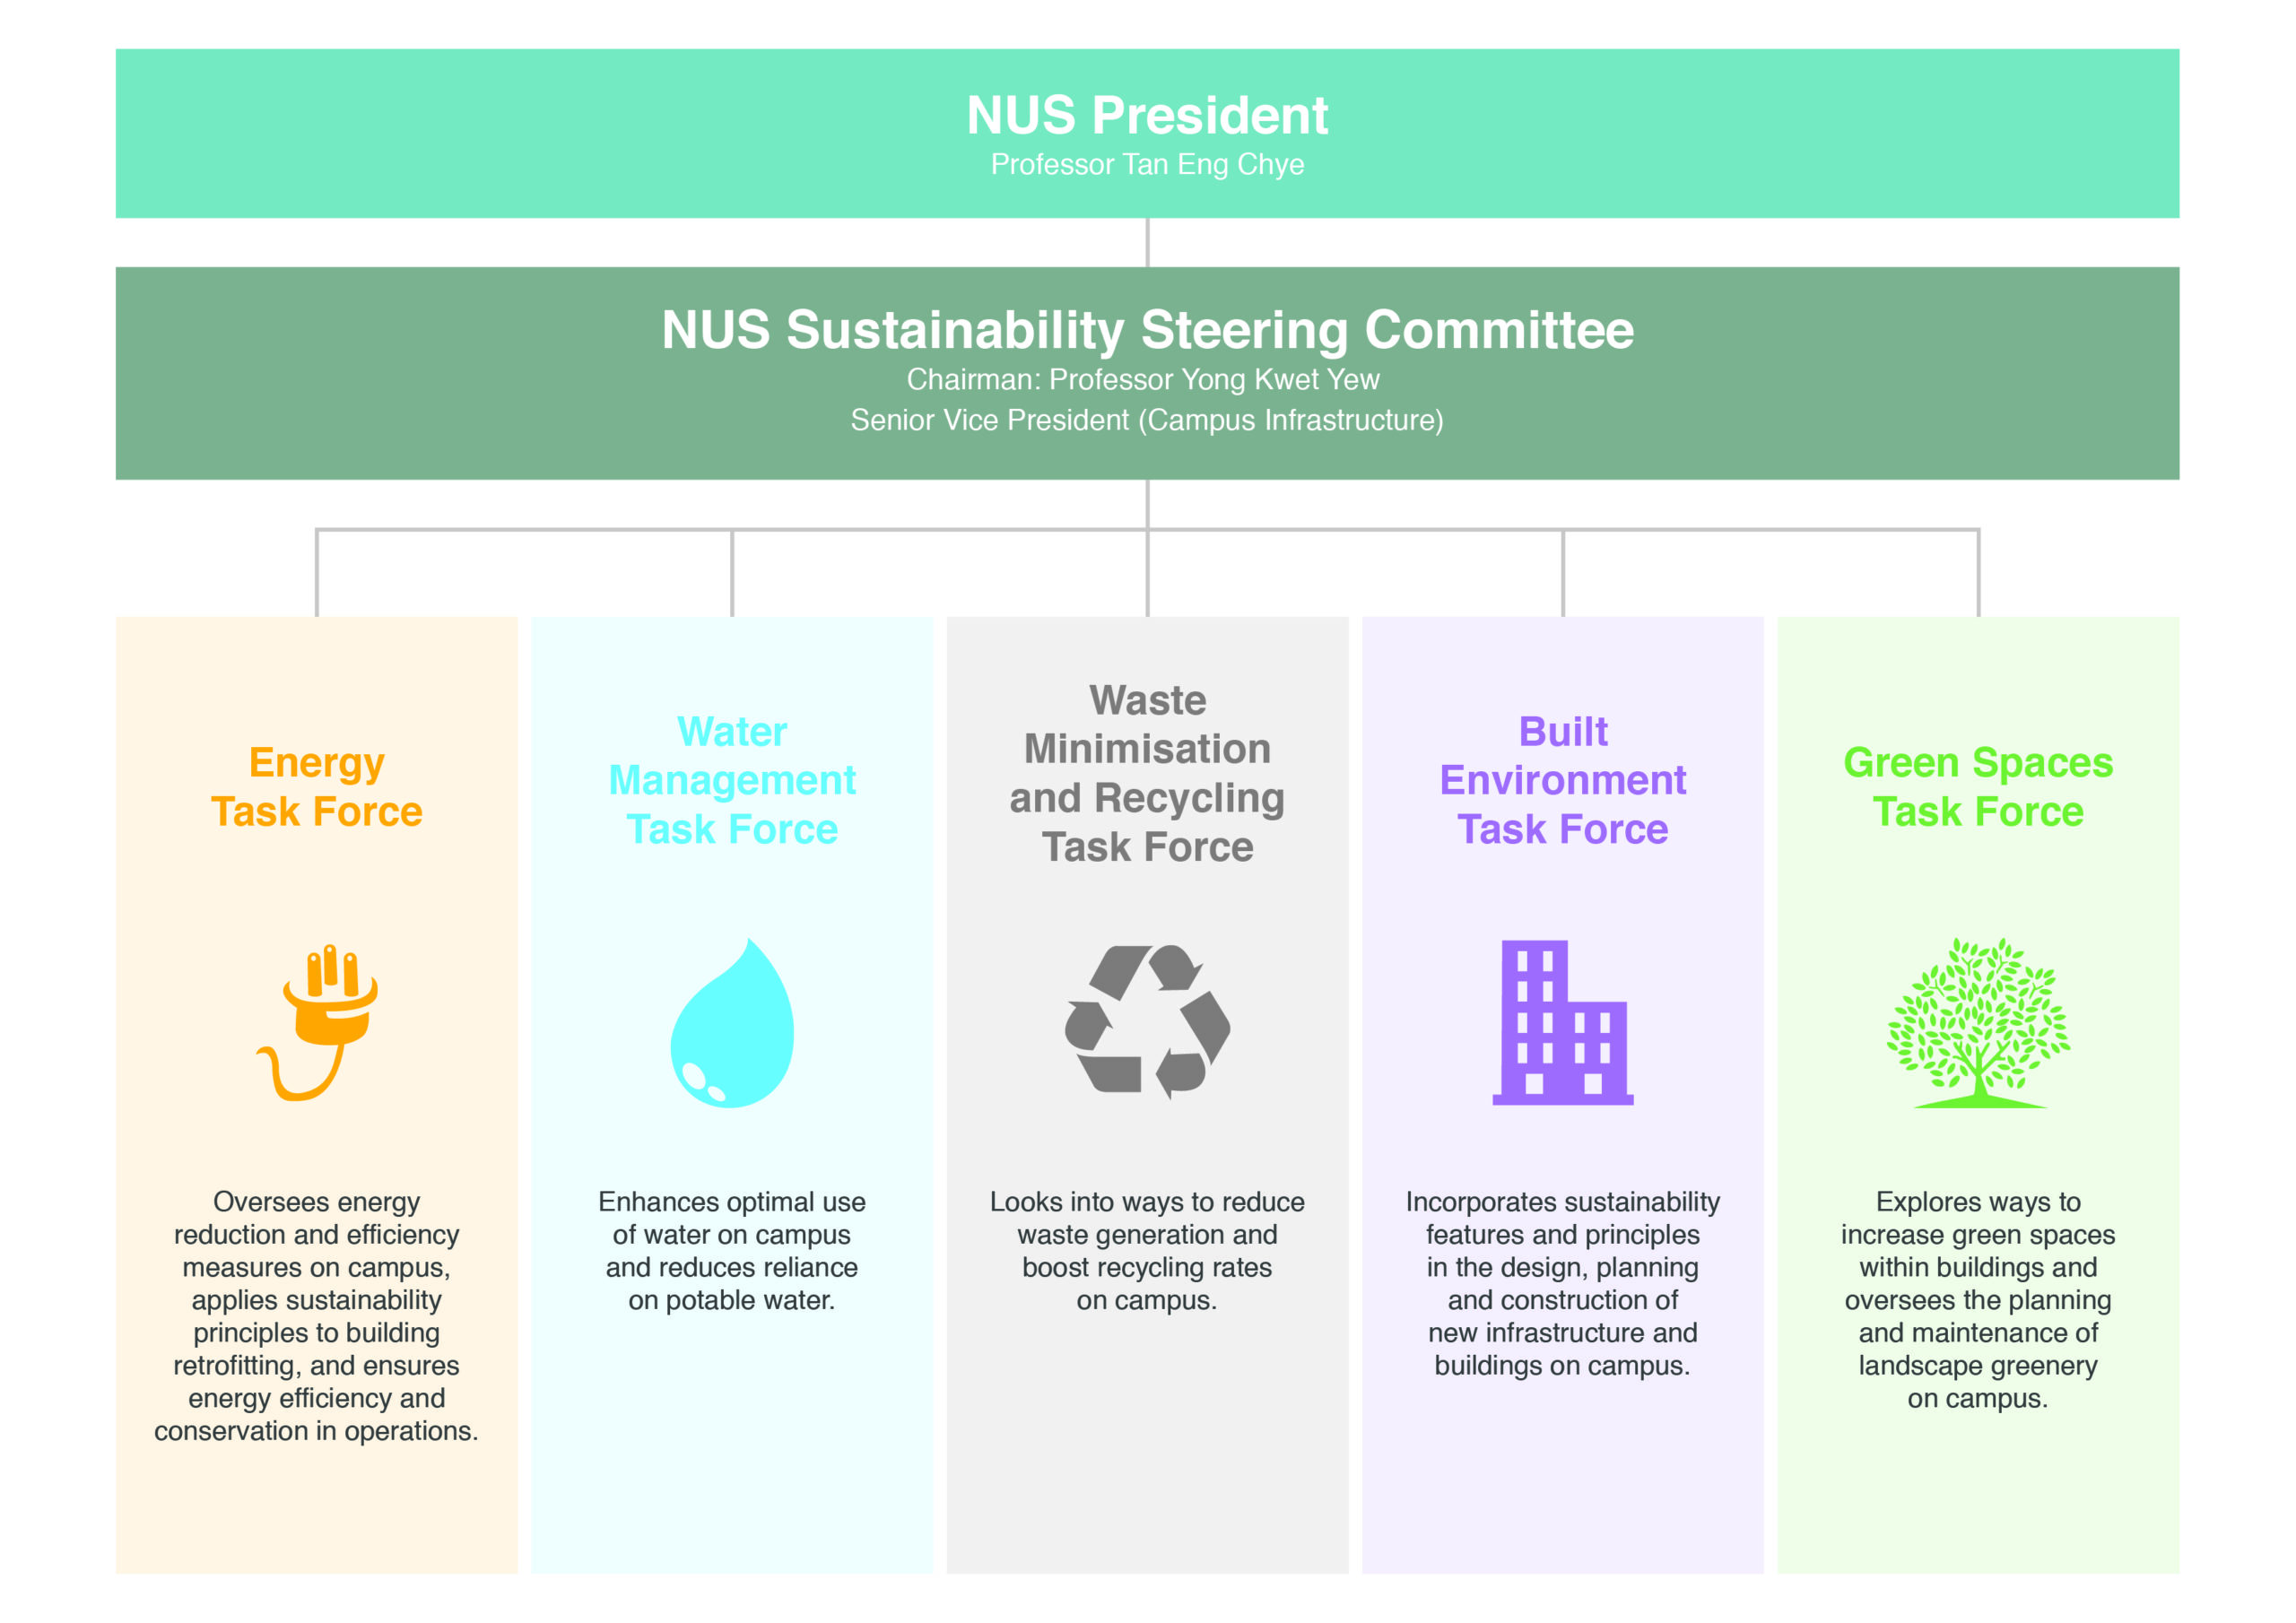 Photo Courtesy of NUS Sustainability Steering Committee 

